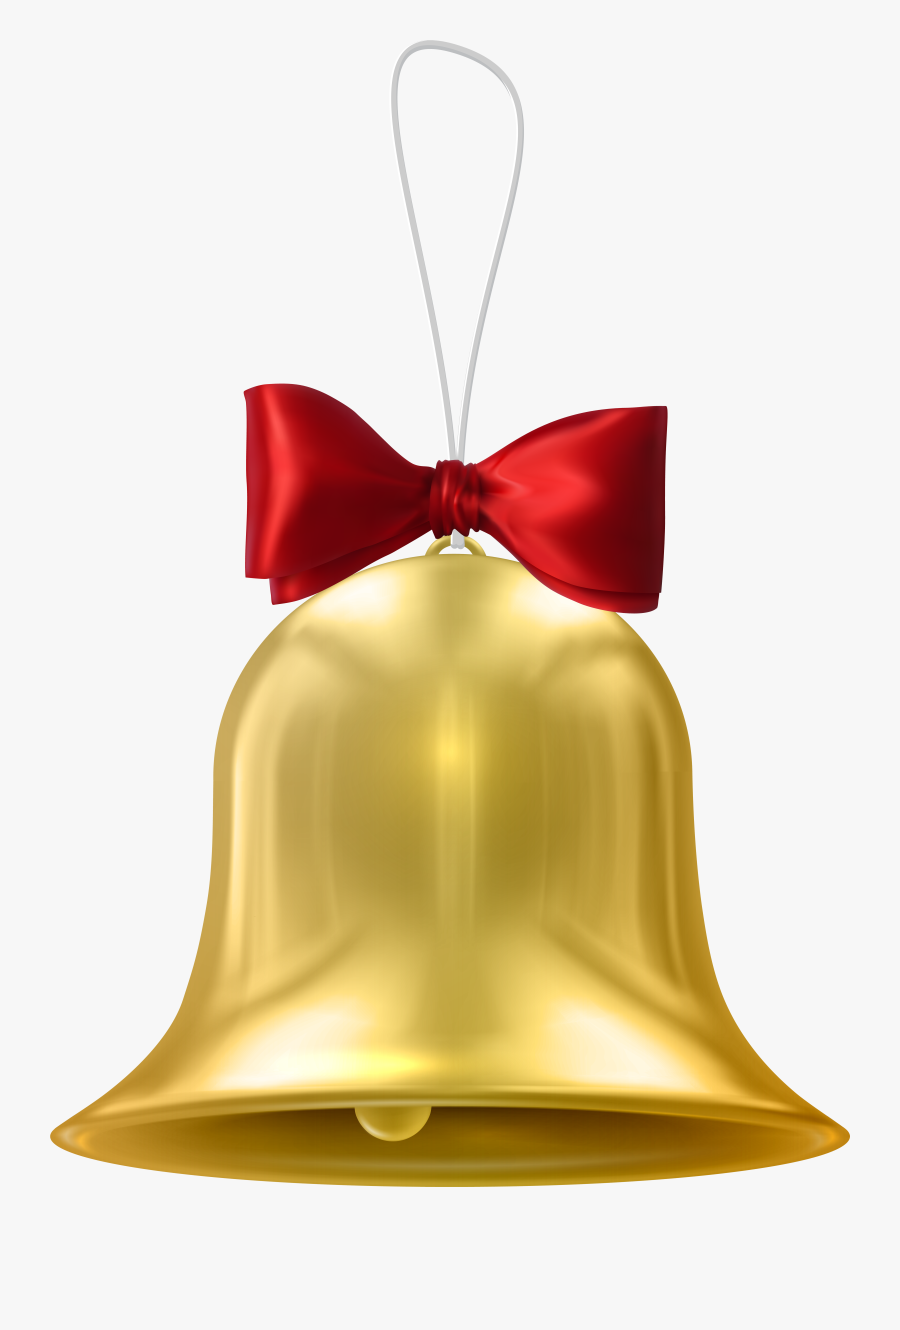 Christmas Gold Bell Transparent Png Clip Art - Christmas Bells In Silver Colour, Transparent Clipart